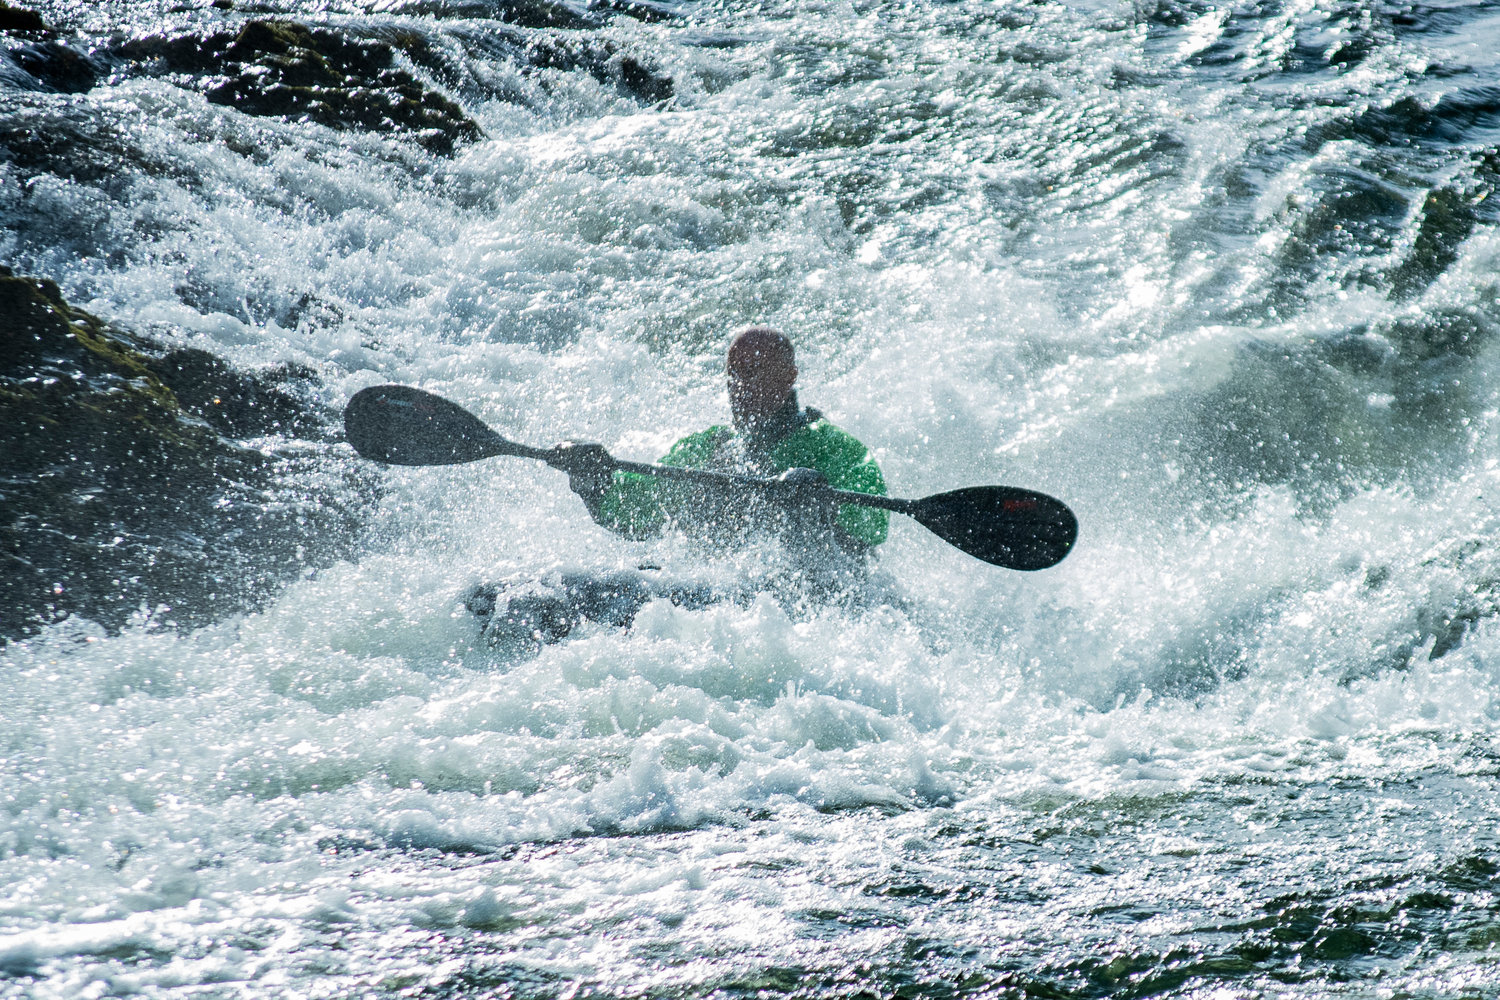 A kayaker rides through the spray at Rainbow Falls during the Pe Ell River Run on Saturday.